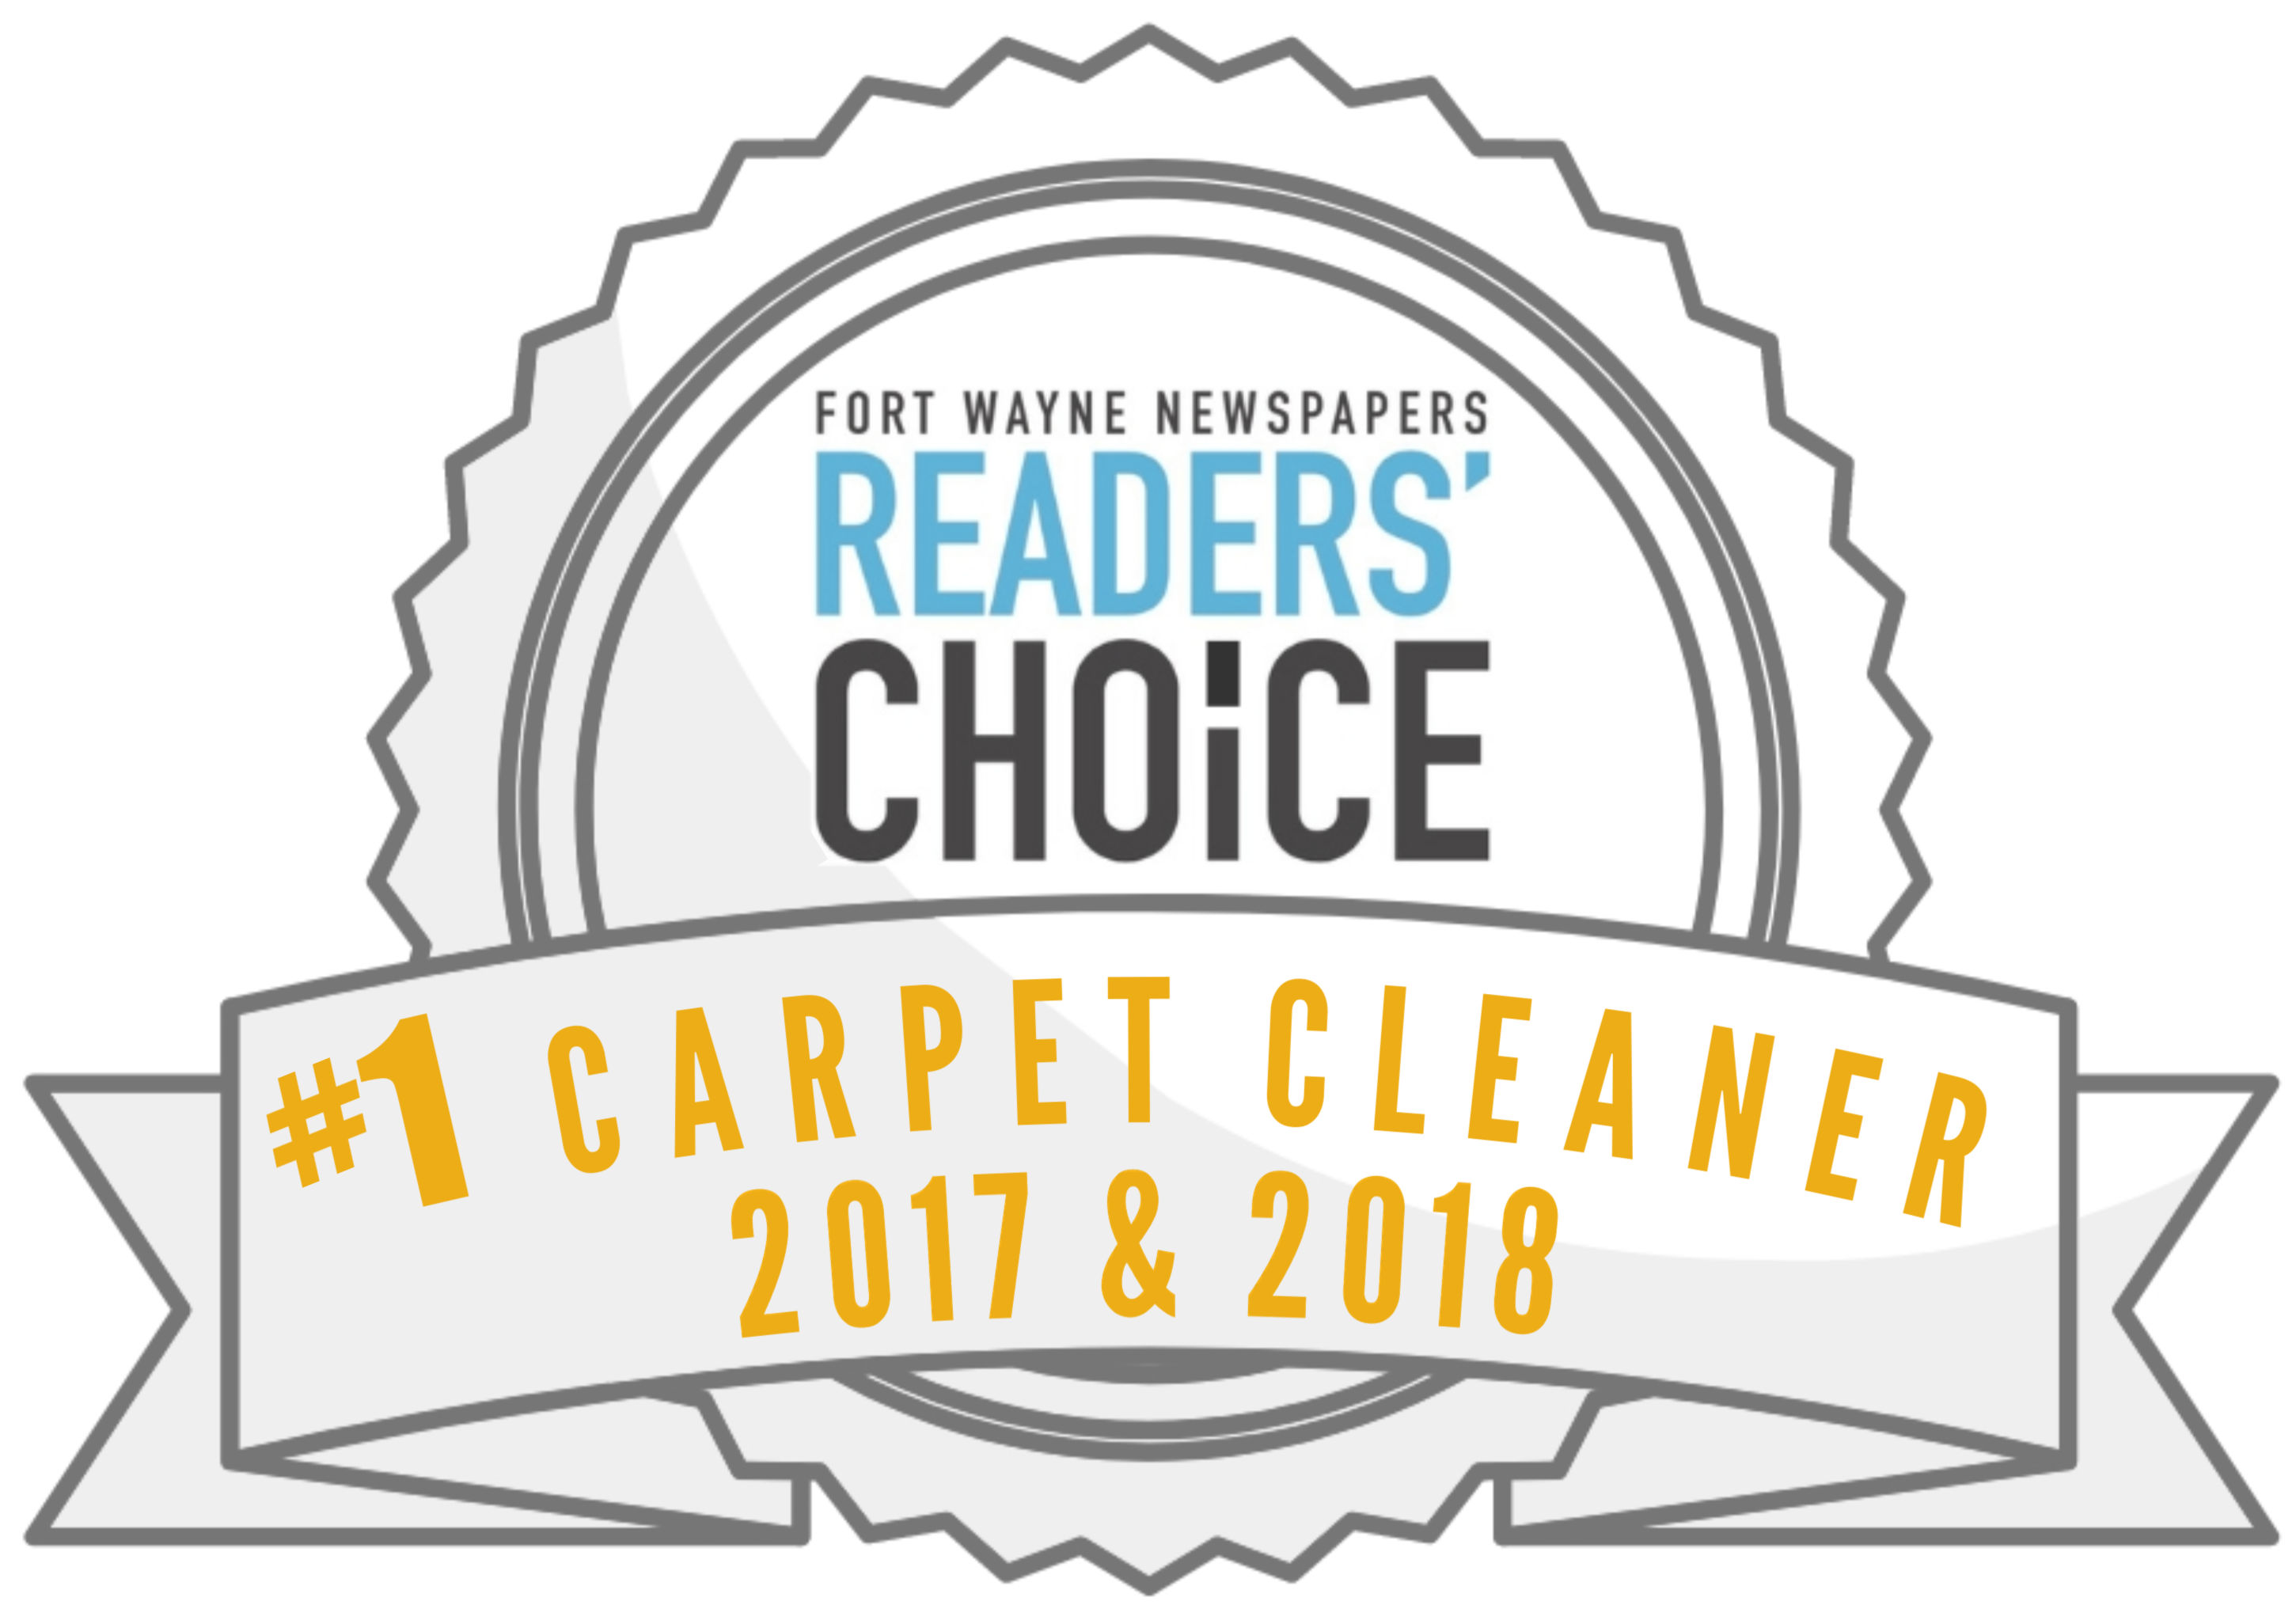 Referral voted #1 Carpet Cleaner in Fort Wayne